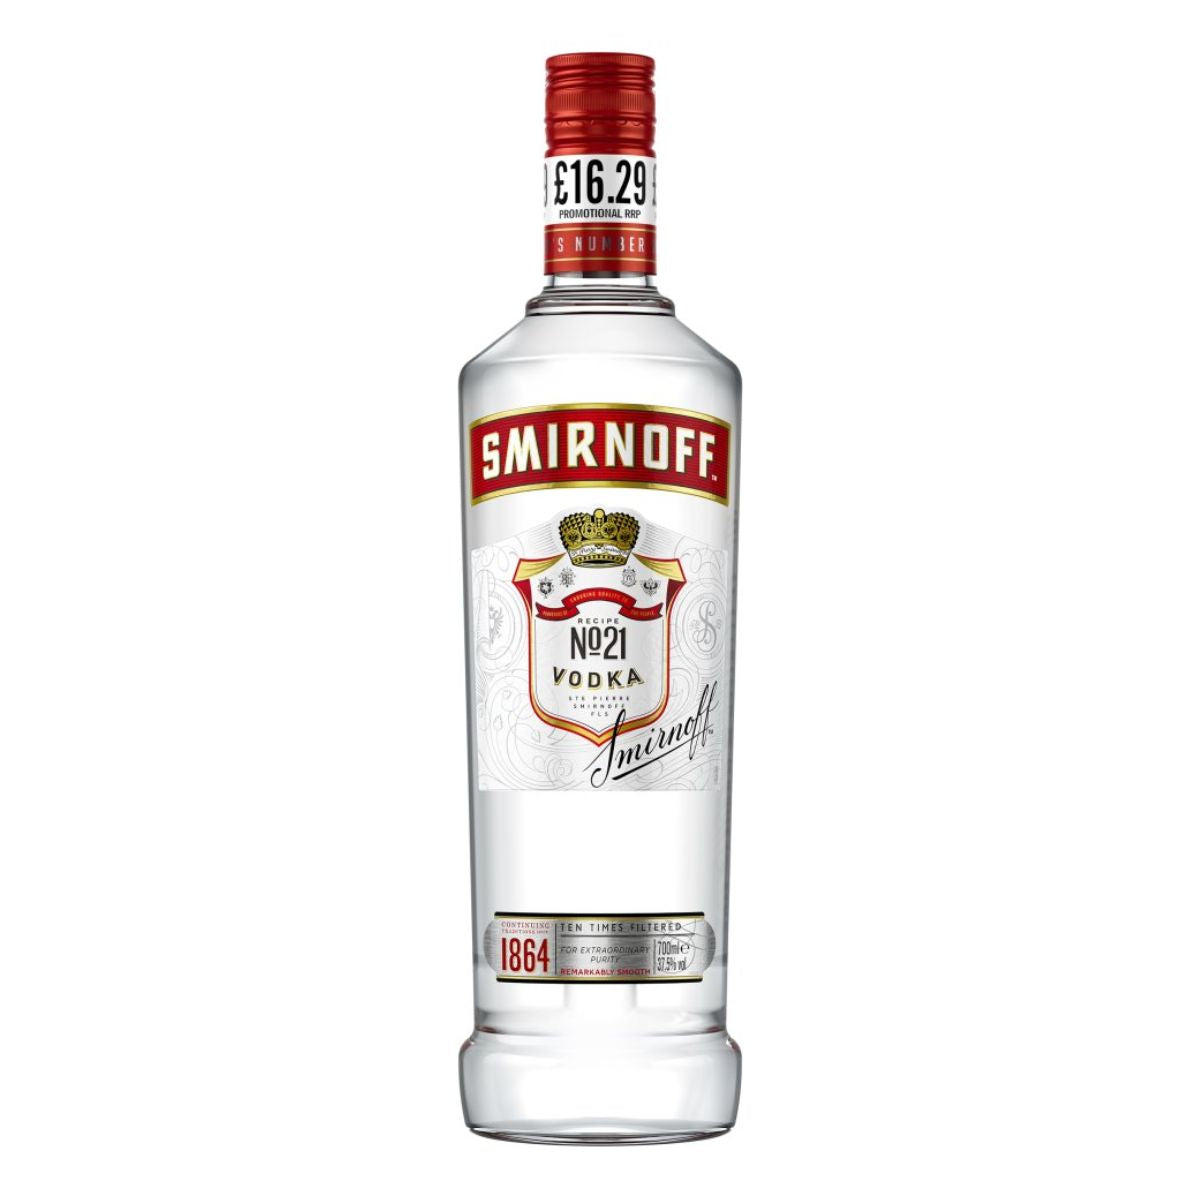 A bottle of Smirnoff - No. 21 Vodka on a white background.